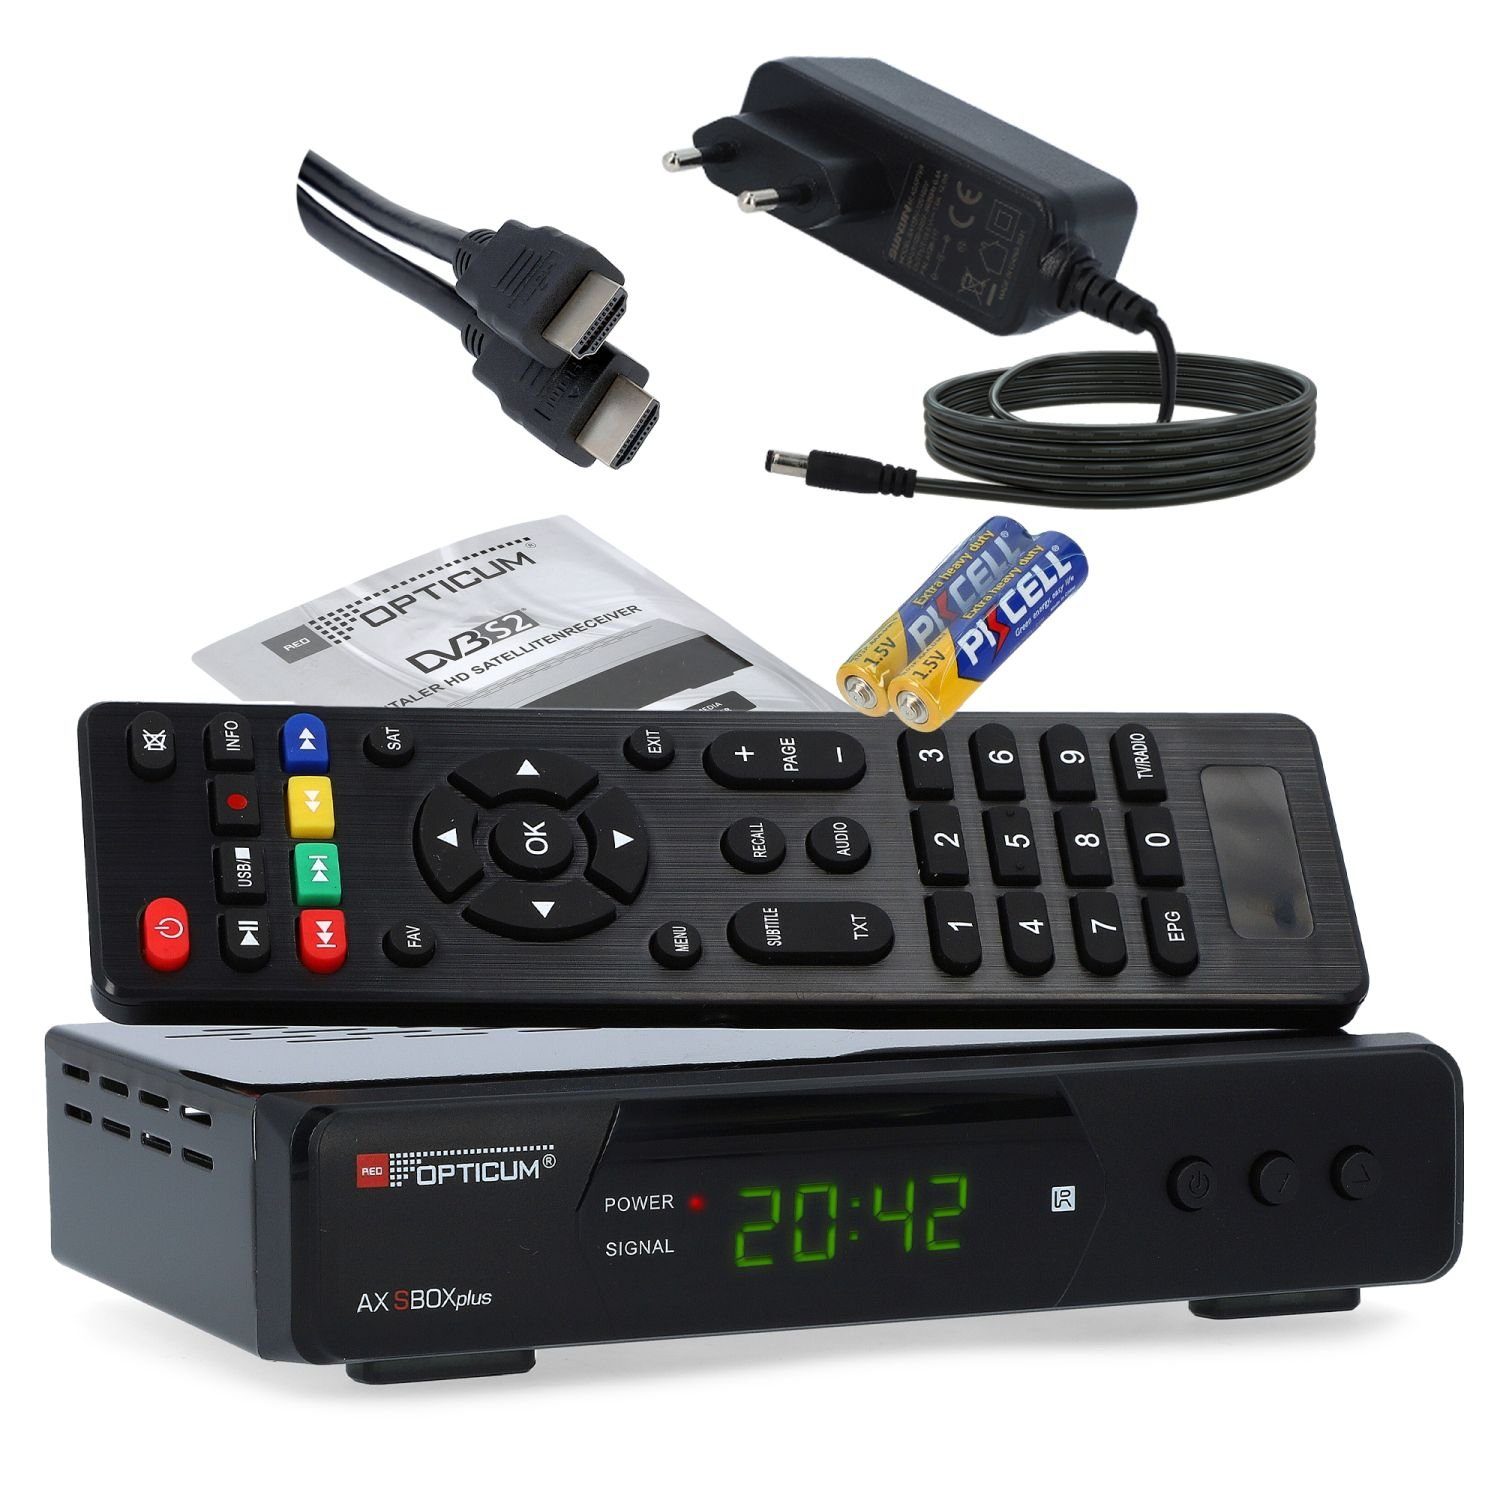 RED OPTICUM SBOX Unicable HDMI, PVR SCART, Kabel tauglich) + Coaxial USB, SAT-Receiver (PVR, - HDMI & Timeshift Aufnahmefunktion mit Plus